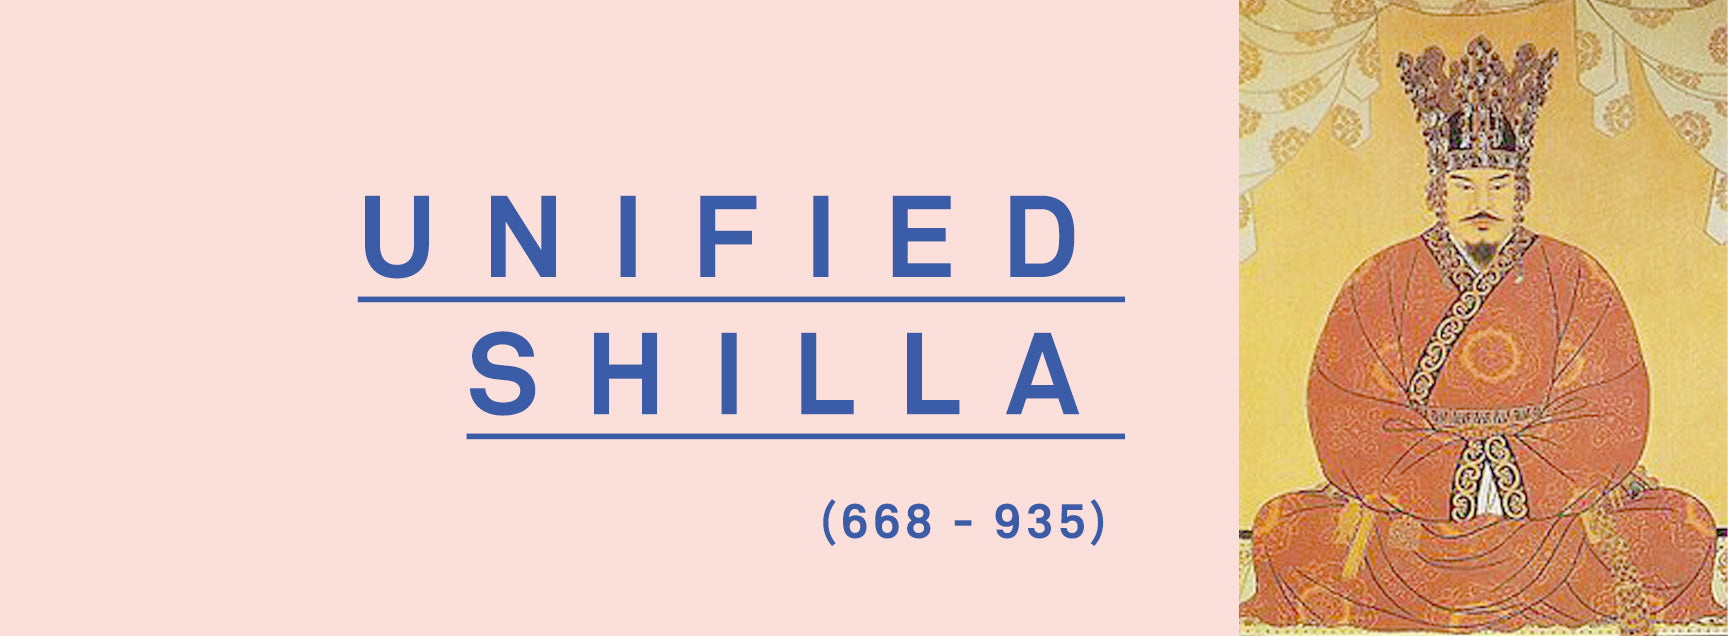 Ohlolly Blog The History of K-beauty Unified Shilla